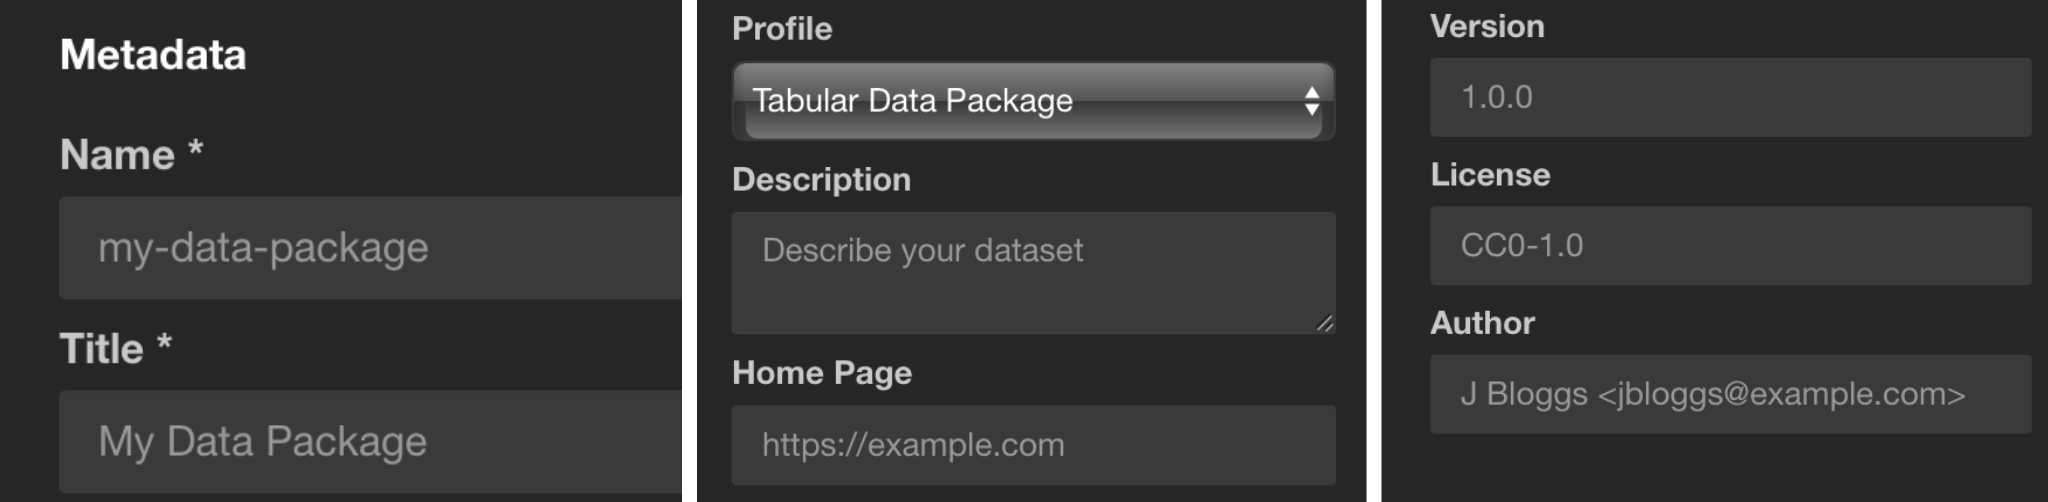 Add Data Package Metadata